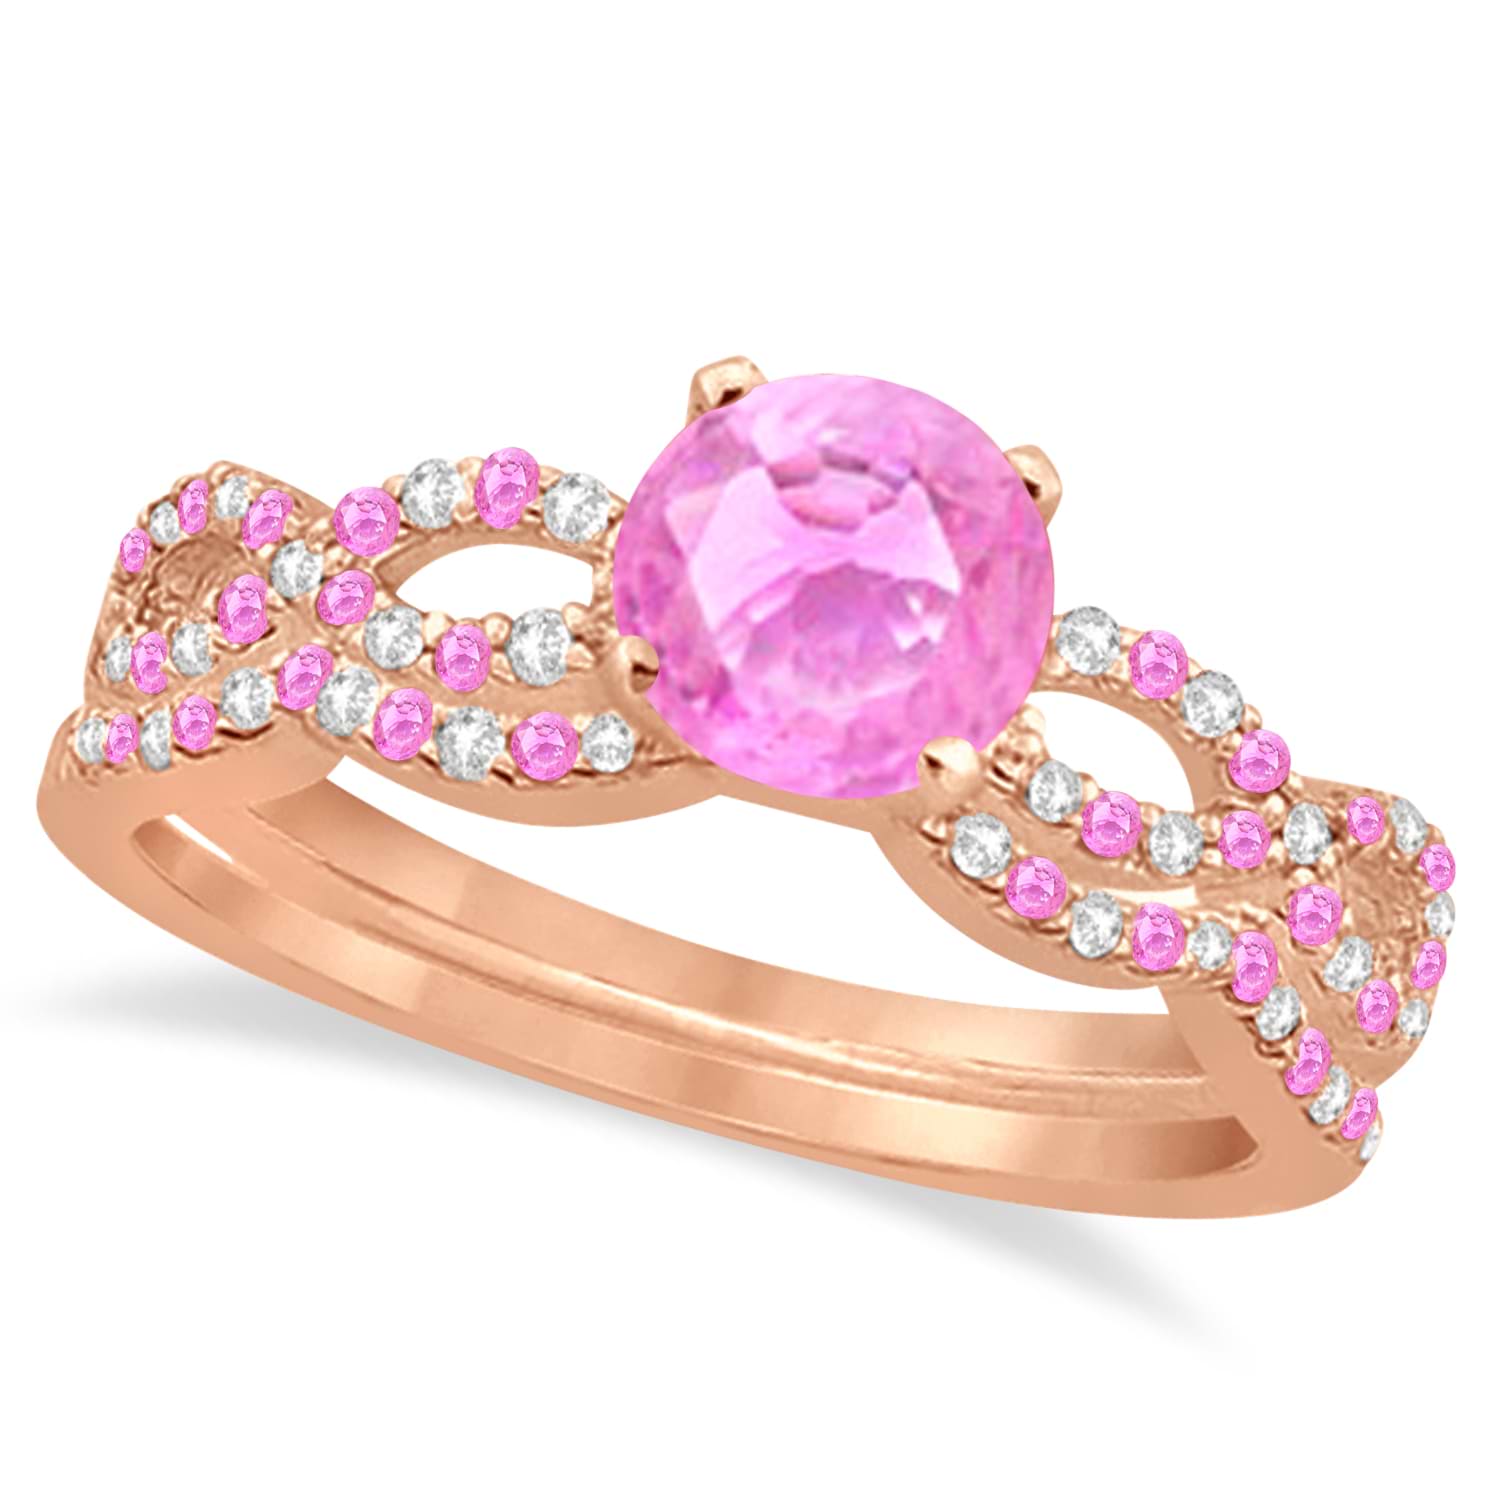 Infinity Style Pink Sapphire & Diamond Bridal Set 18k Rose Gold 1.29ct